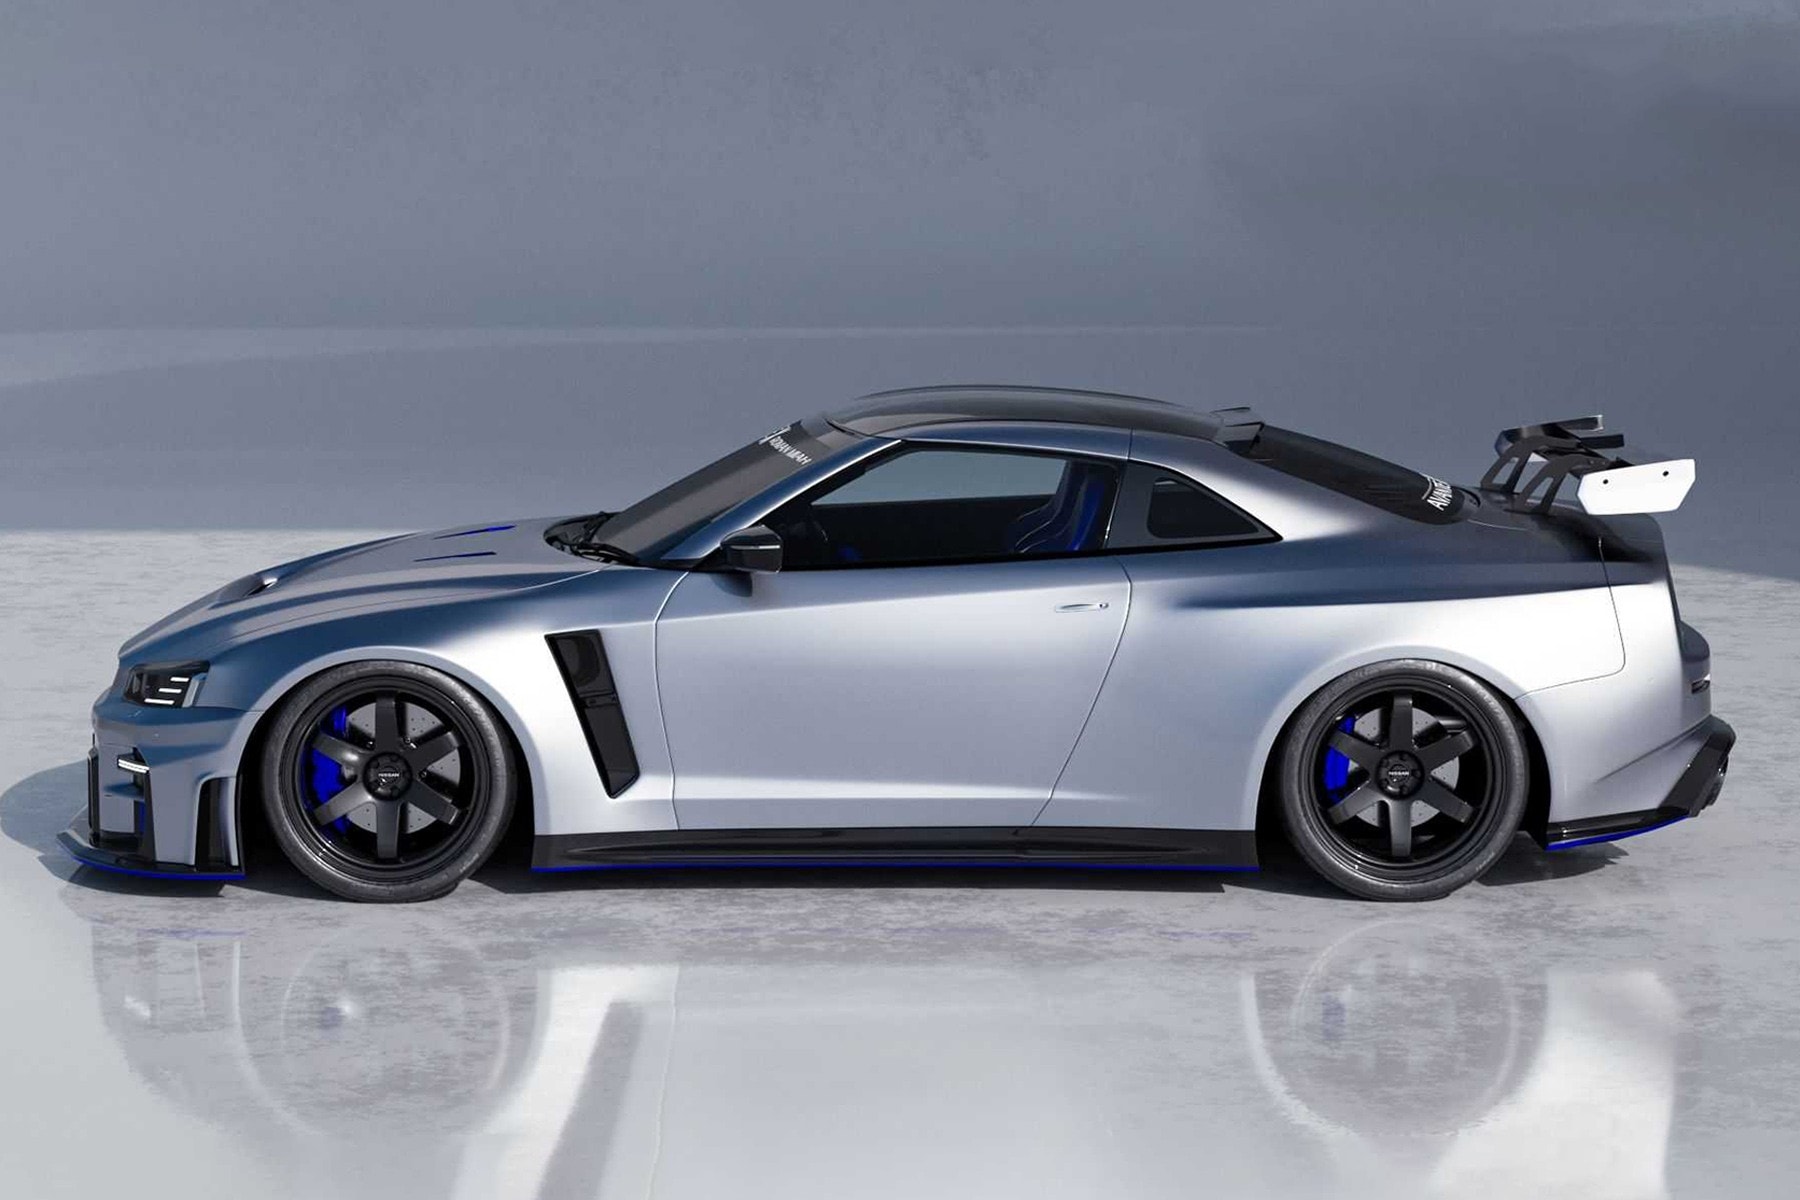 2023 R36 Nissan Skyline GT-R concept by Roman Miah and Avante Design-1 -  Paul Tan's Automotive News